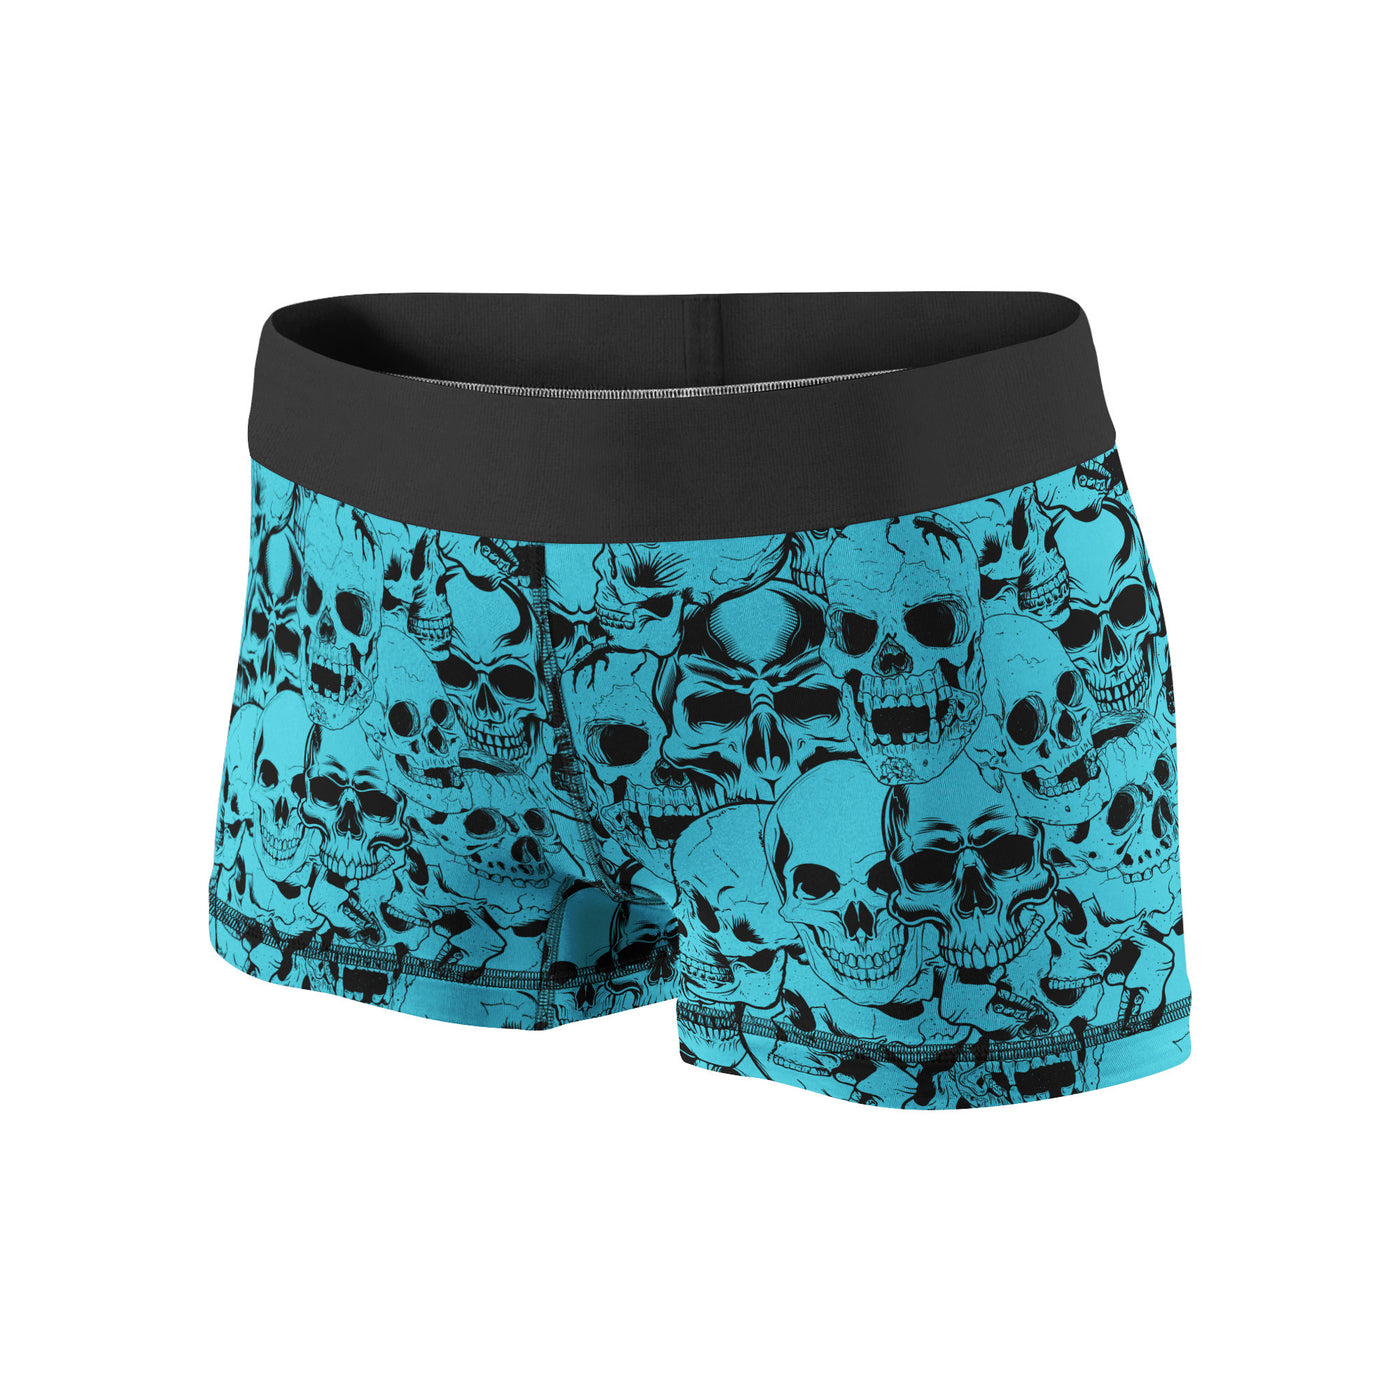 Turquoise Skulls Fitness Shorts